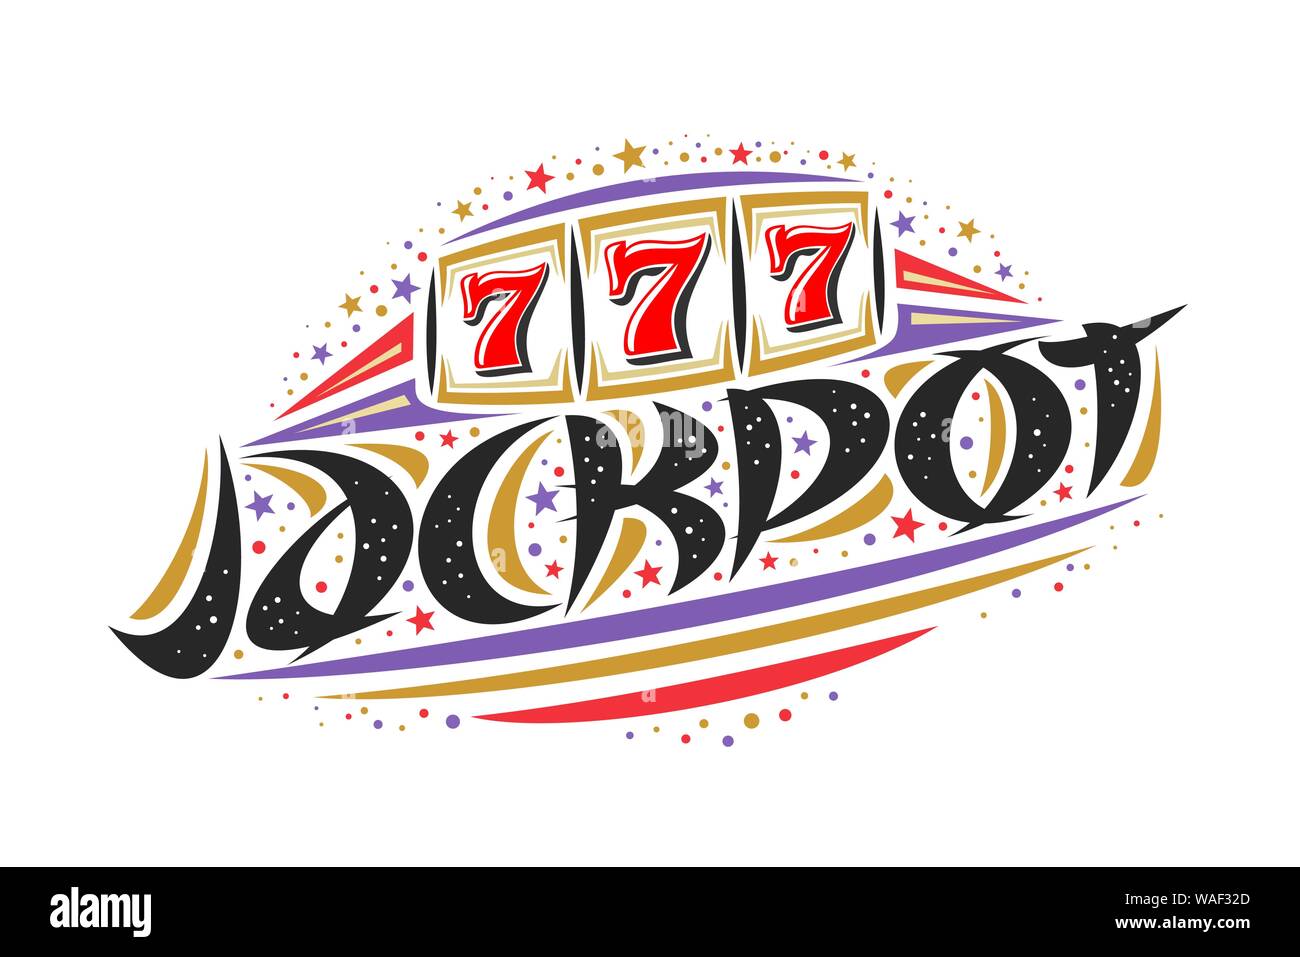 Vektor logo für Jackpot, kreative farbige Abbildung der Haspel der Spielautomat, original dekorative Pinsel Schriftzug für Wort jackpot, vereinfachende abst Stock Vektor